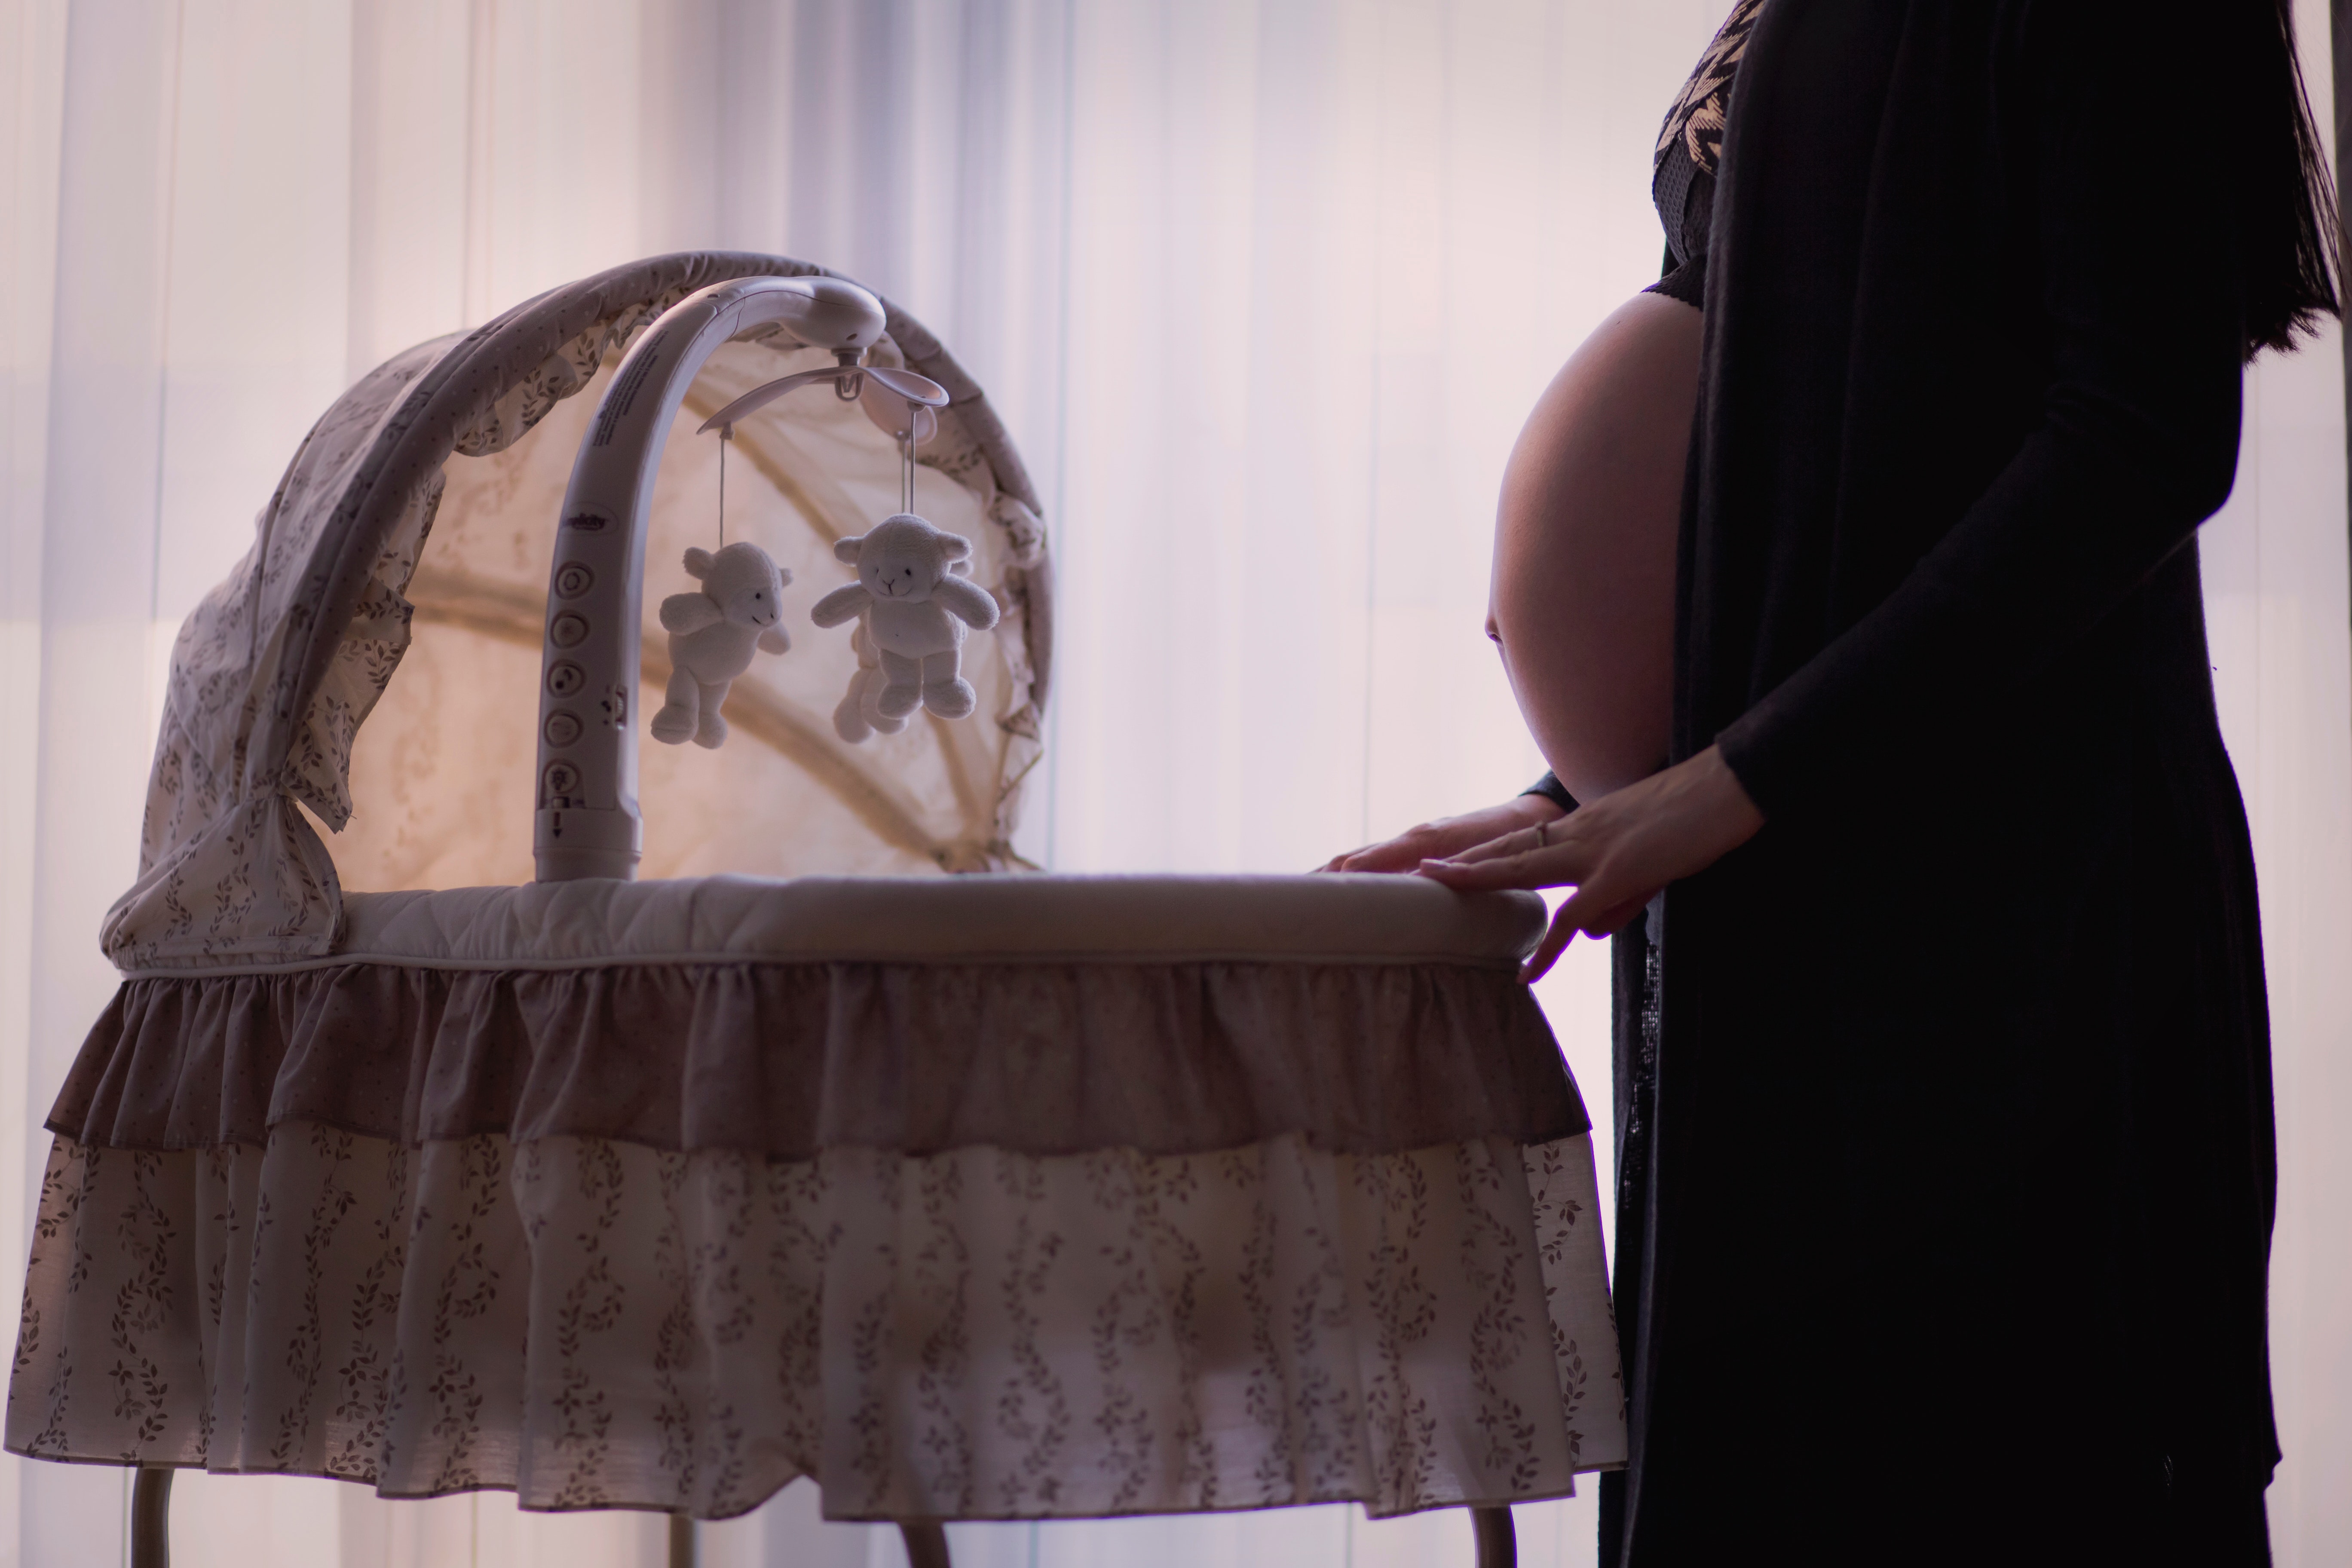 Pregnant woman standing near a bassinet | Source: Pexels